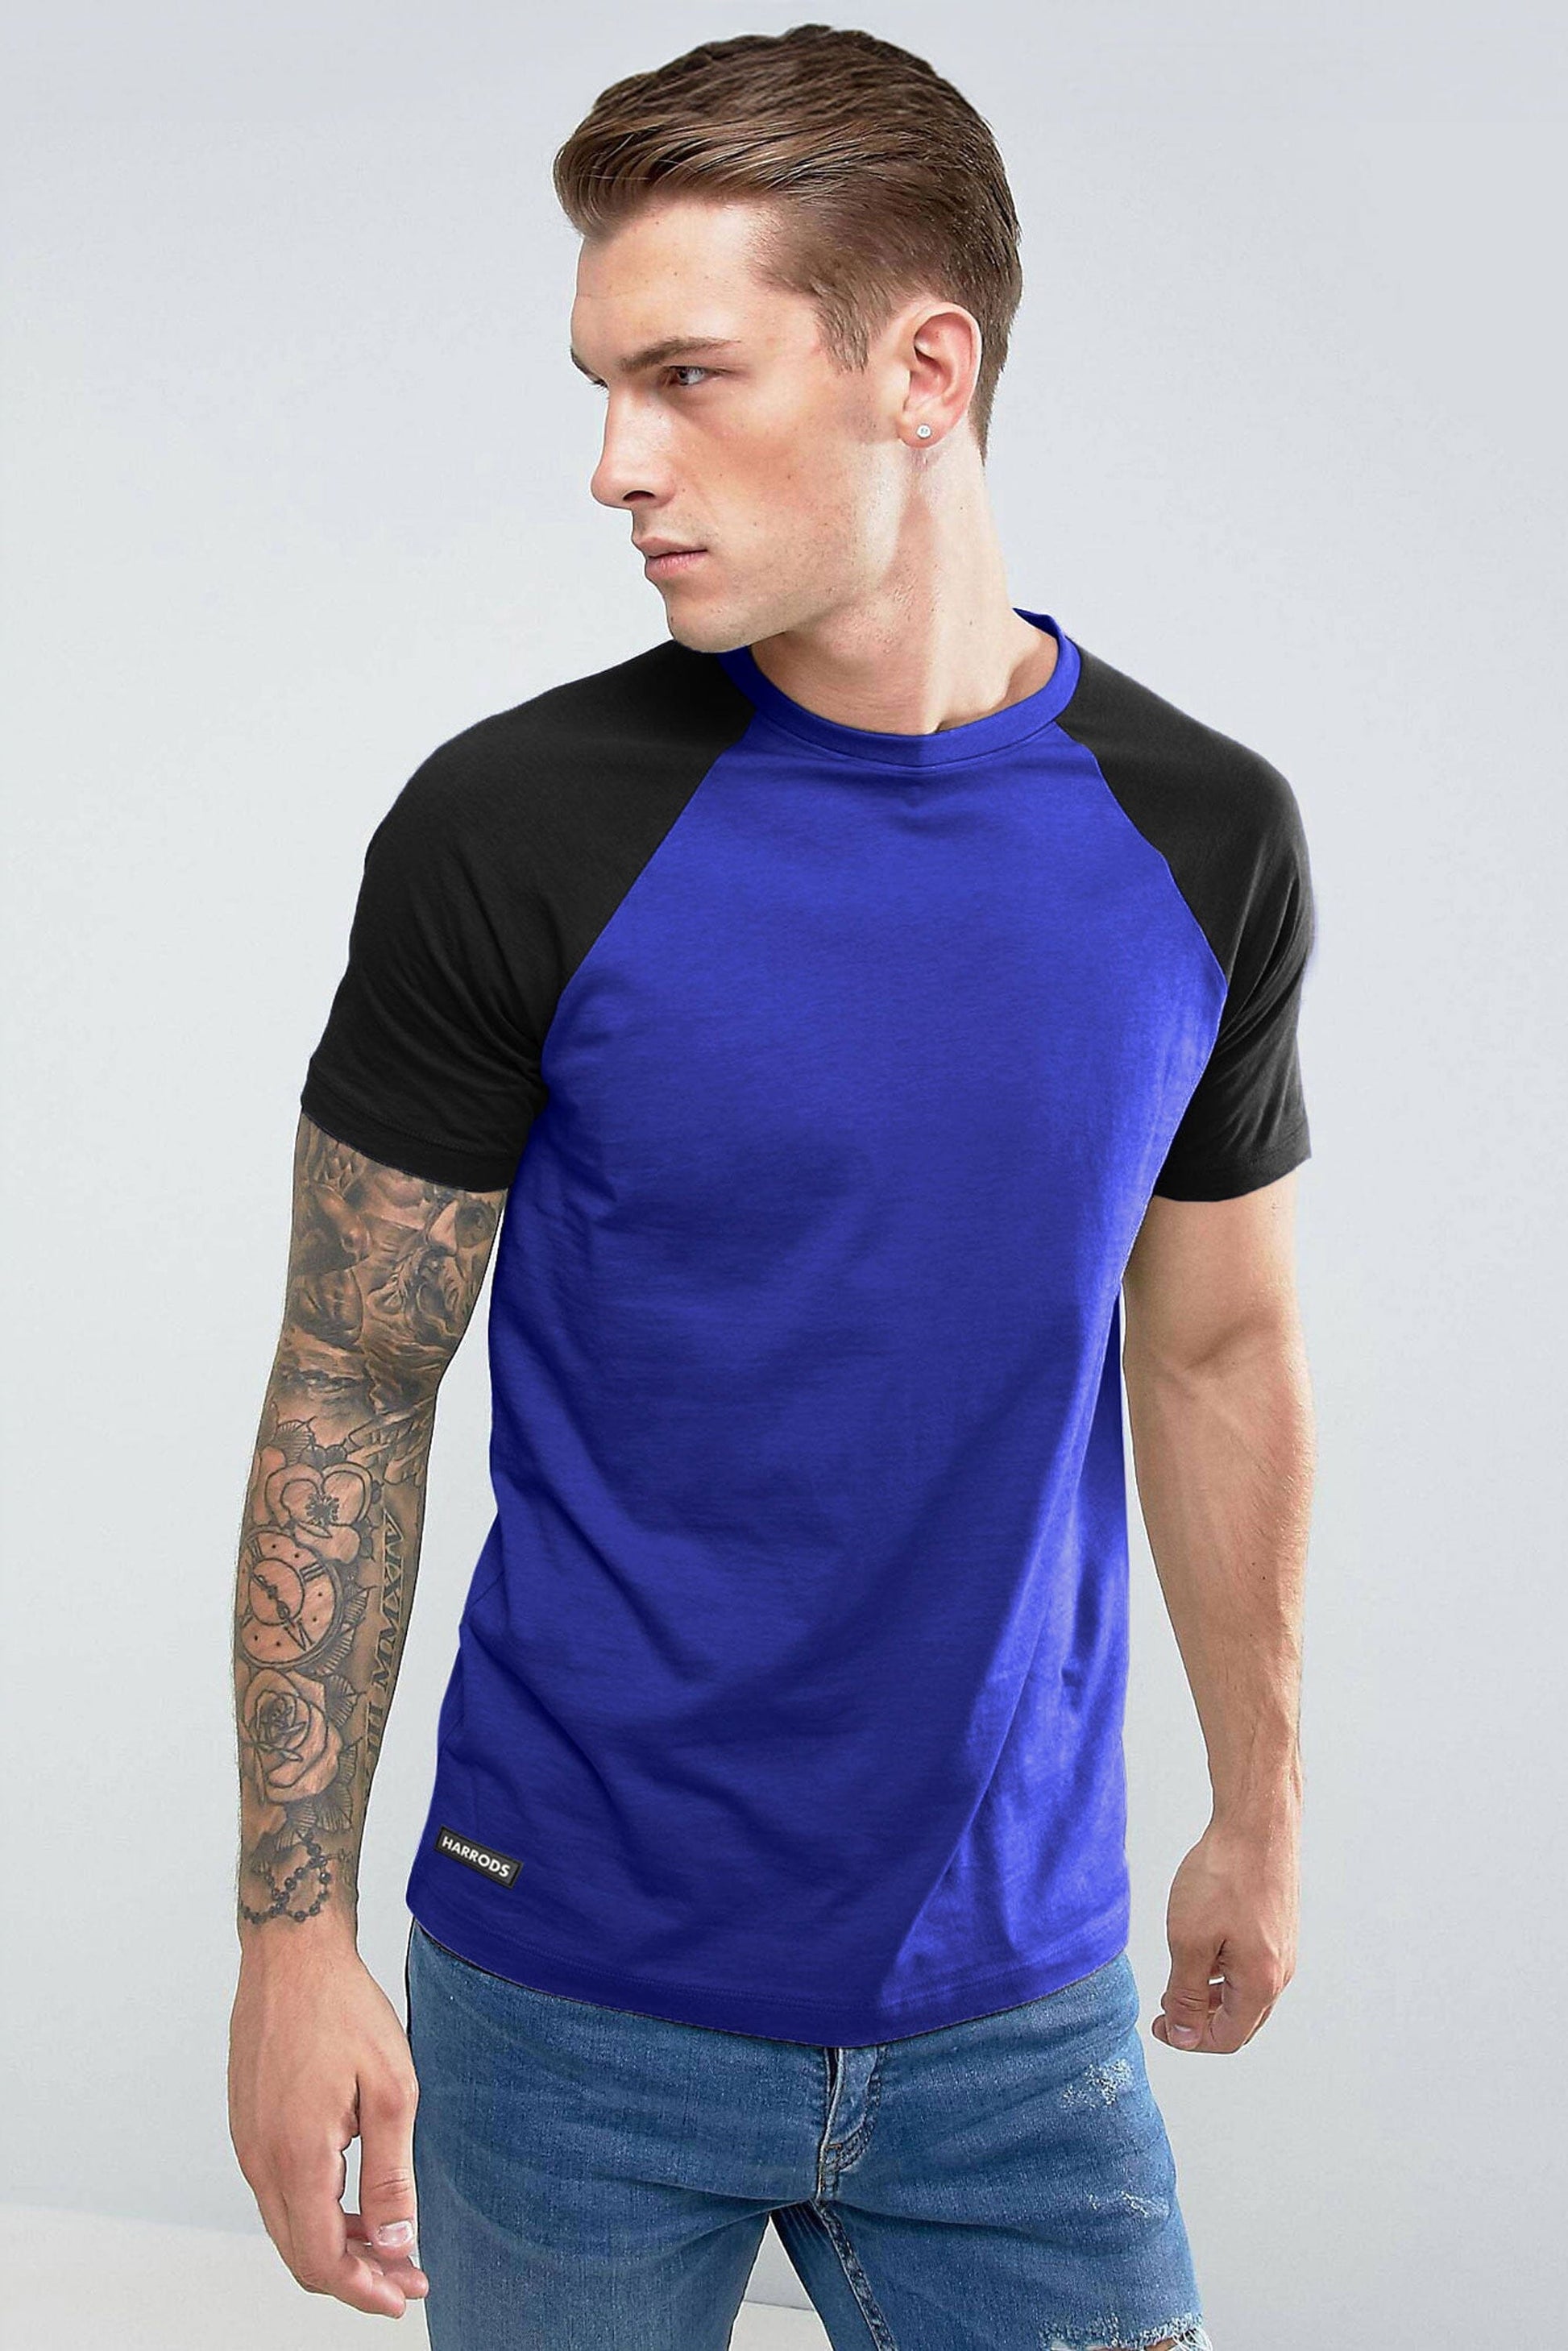 Harrods Men's Contrast Sleeve Style Crew Neck Tee Shirt Men's Tee Shirt IBT Royal S 